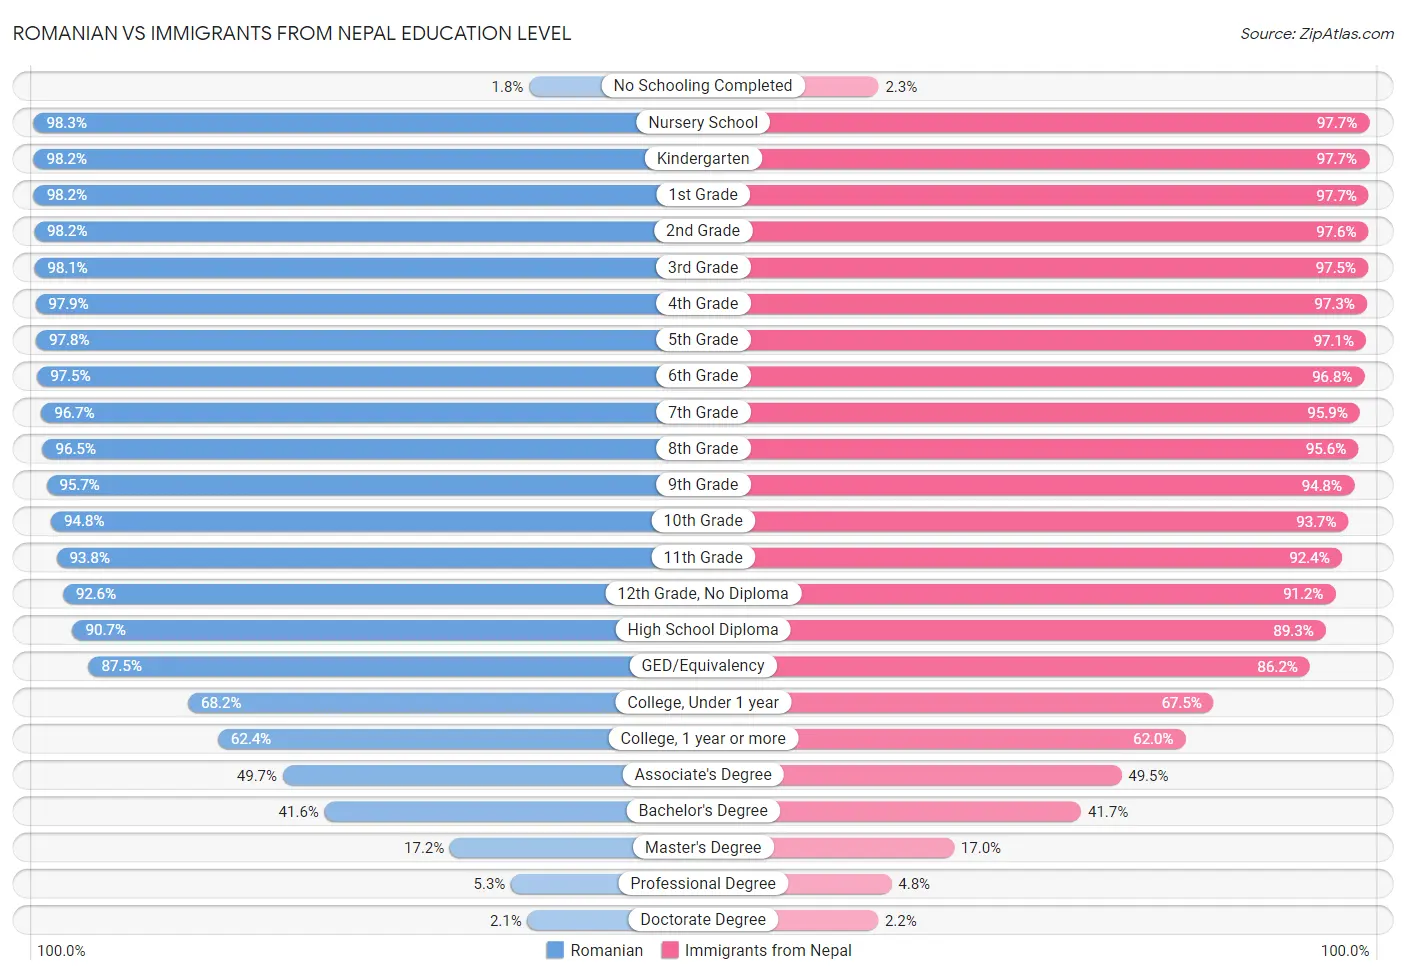 Romanian vs Immigrants from Nepal Education Level